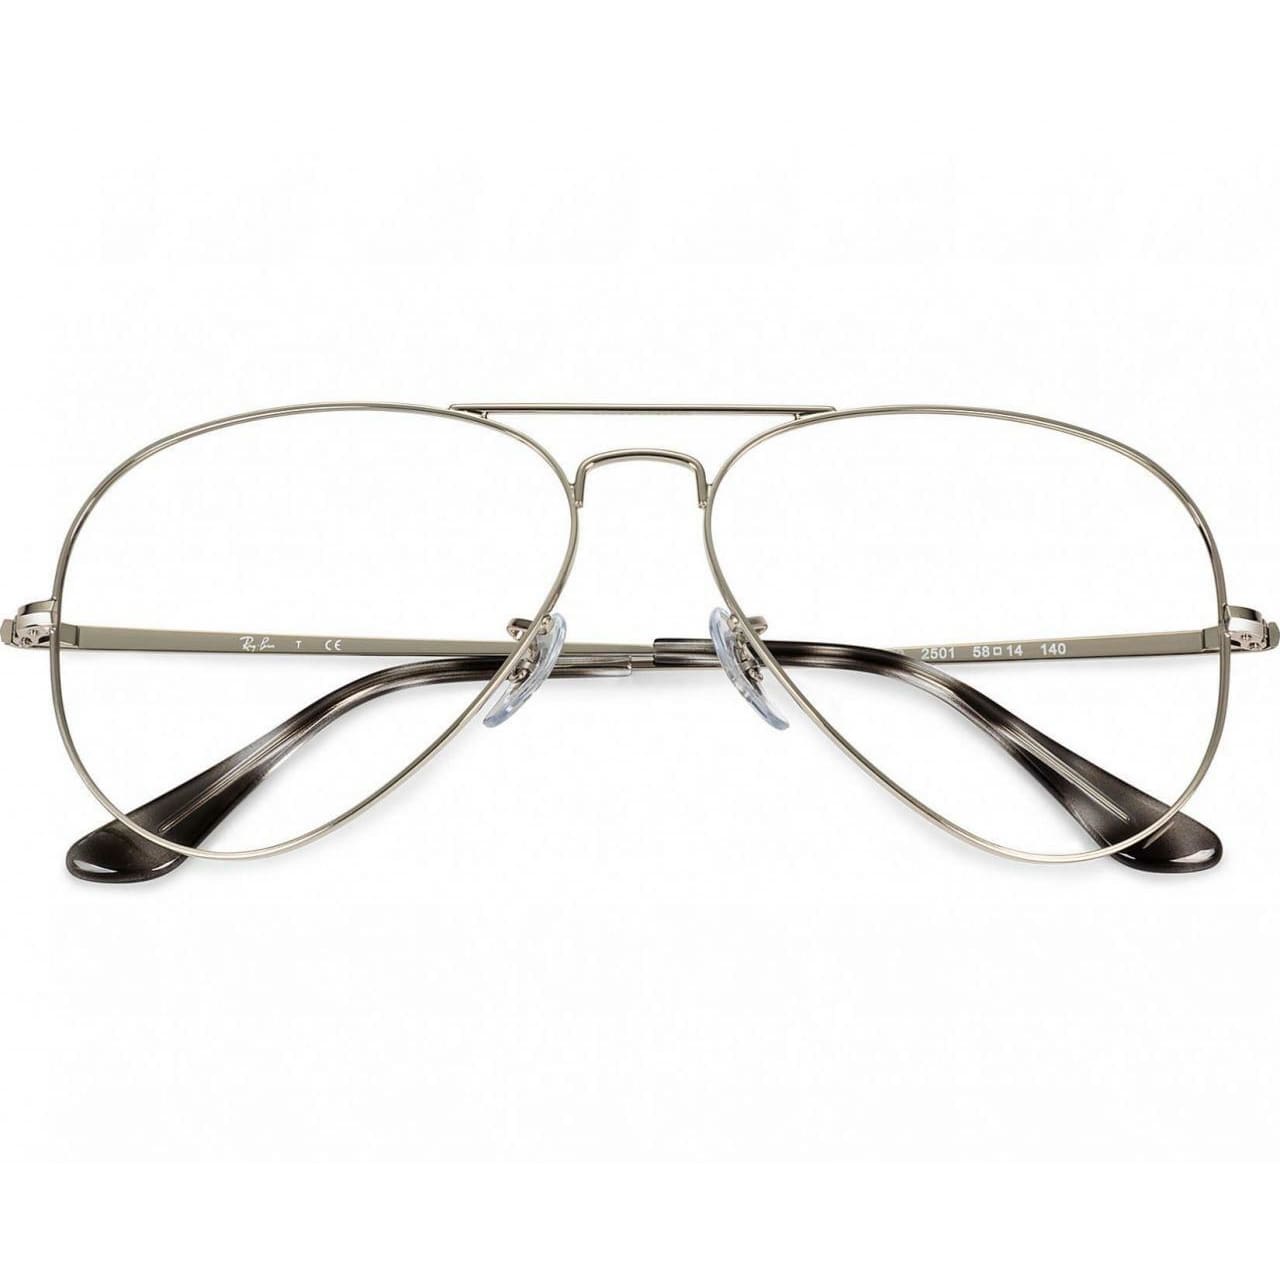 Ray-Ban RB6489 2501 Aviator Optics Silver Full Rim Metal Pilot Eyeglasses Frames 8053672741865